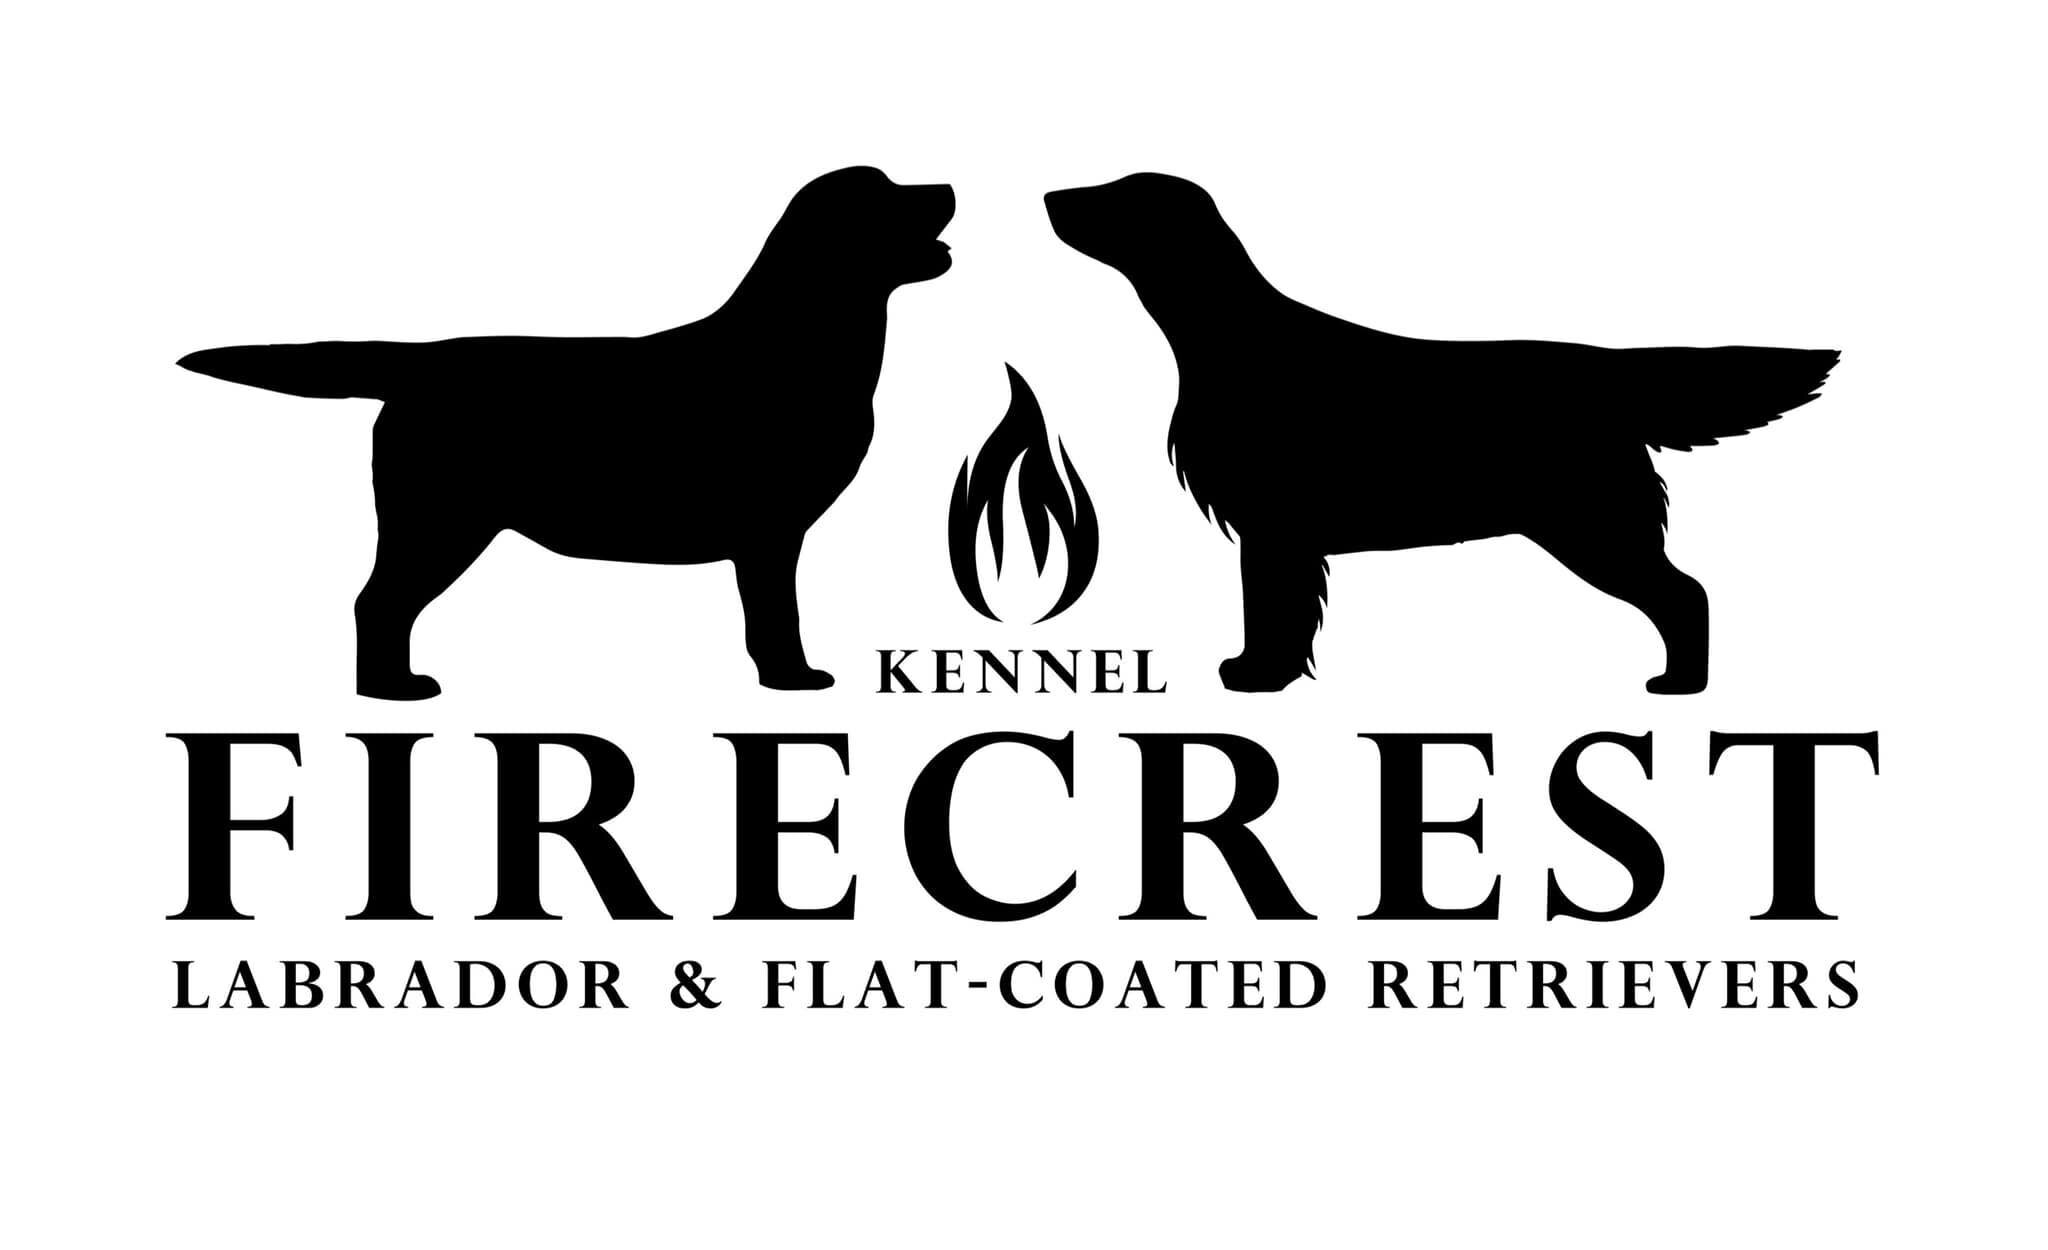 Firecrest Kennel, LLC